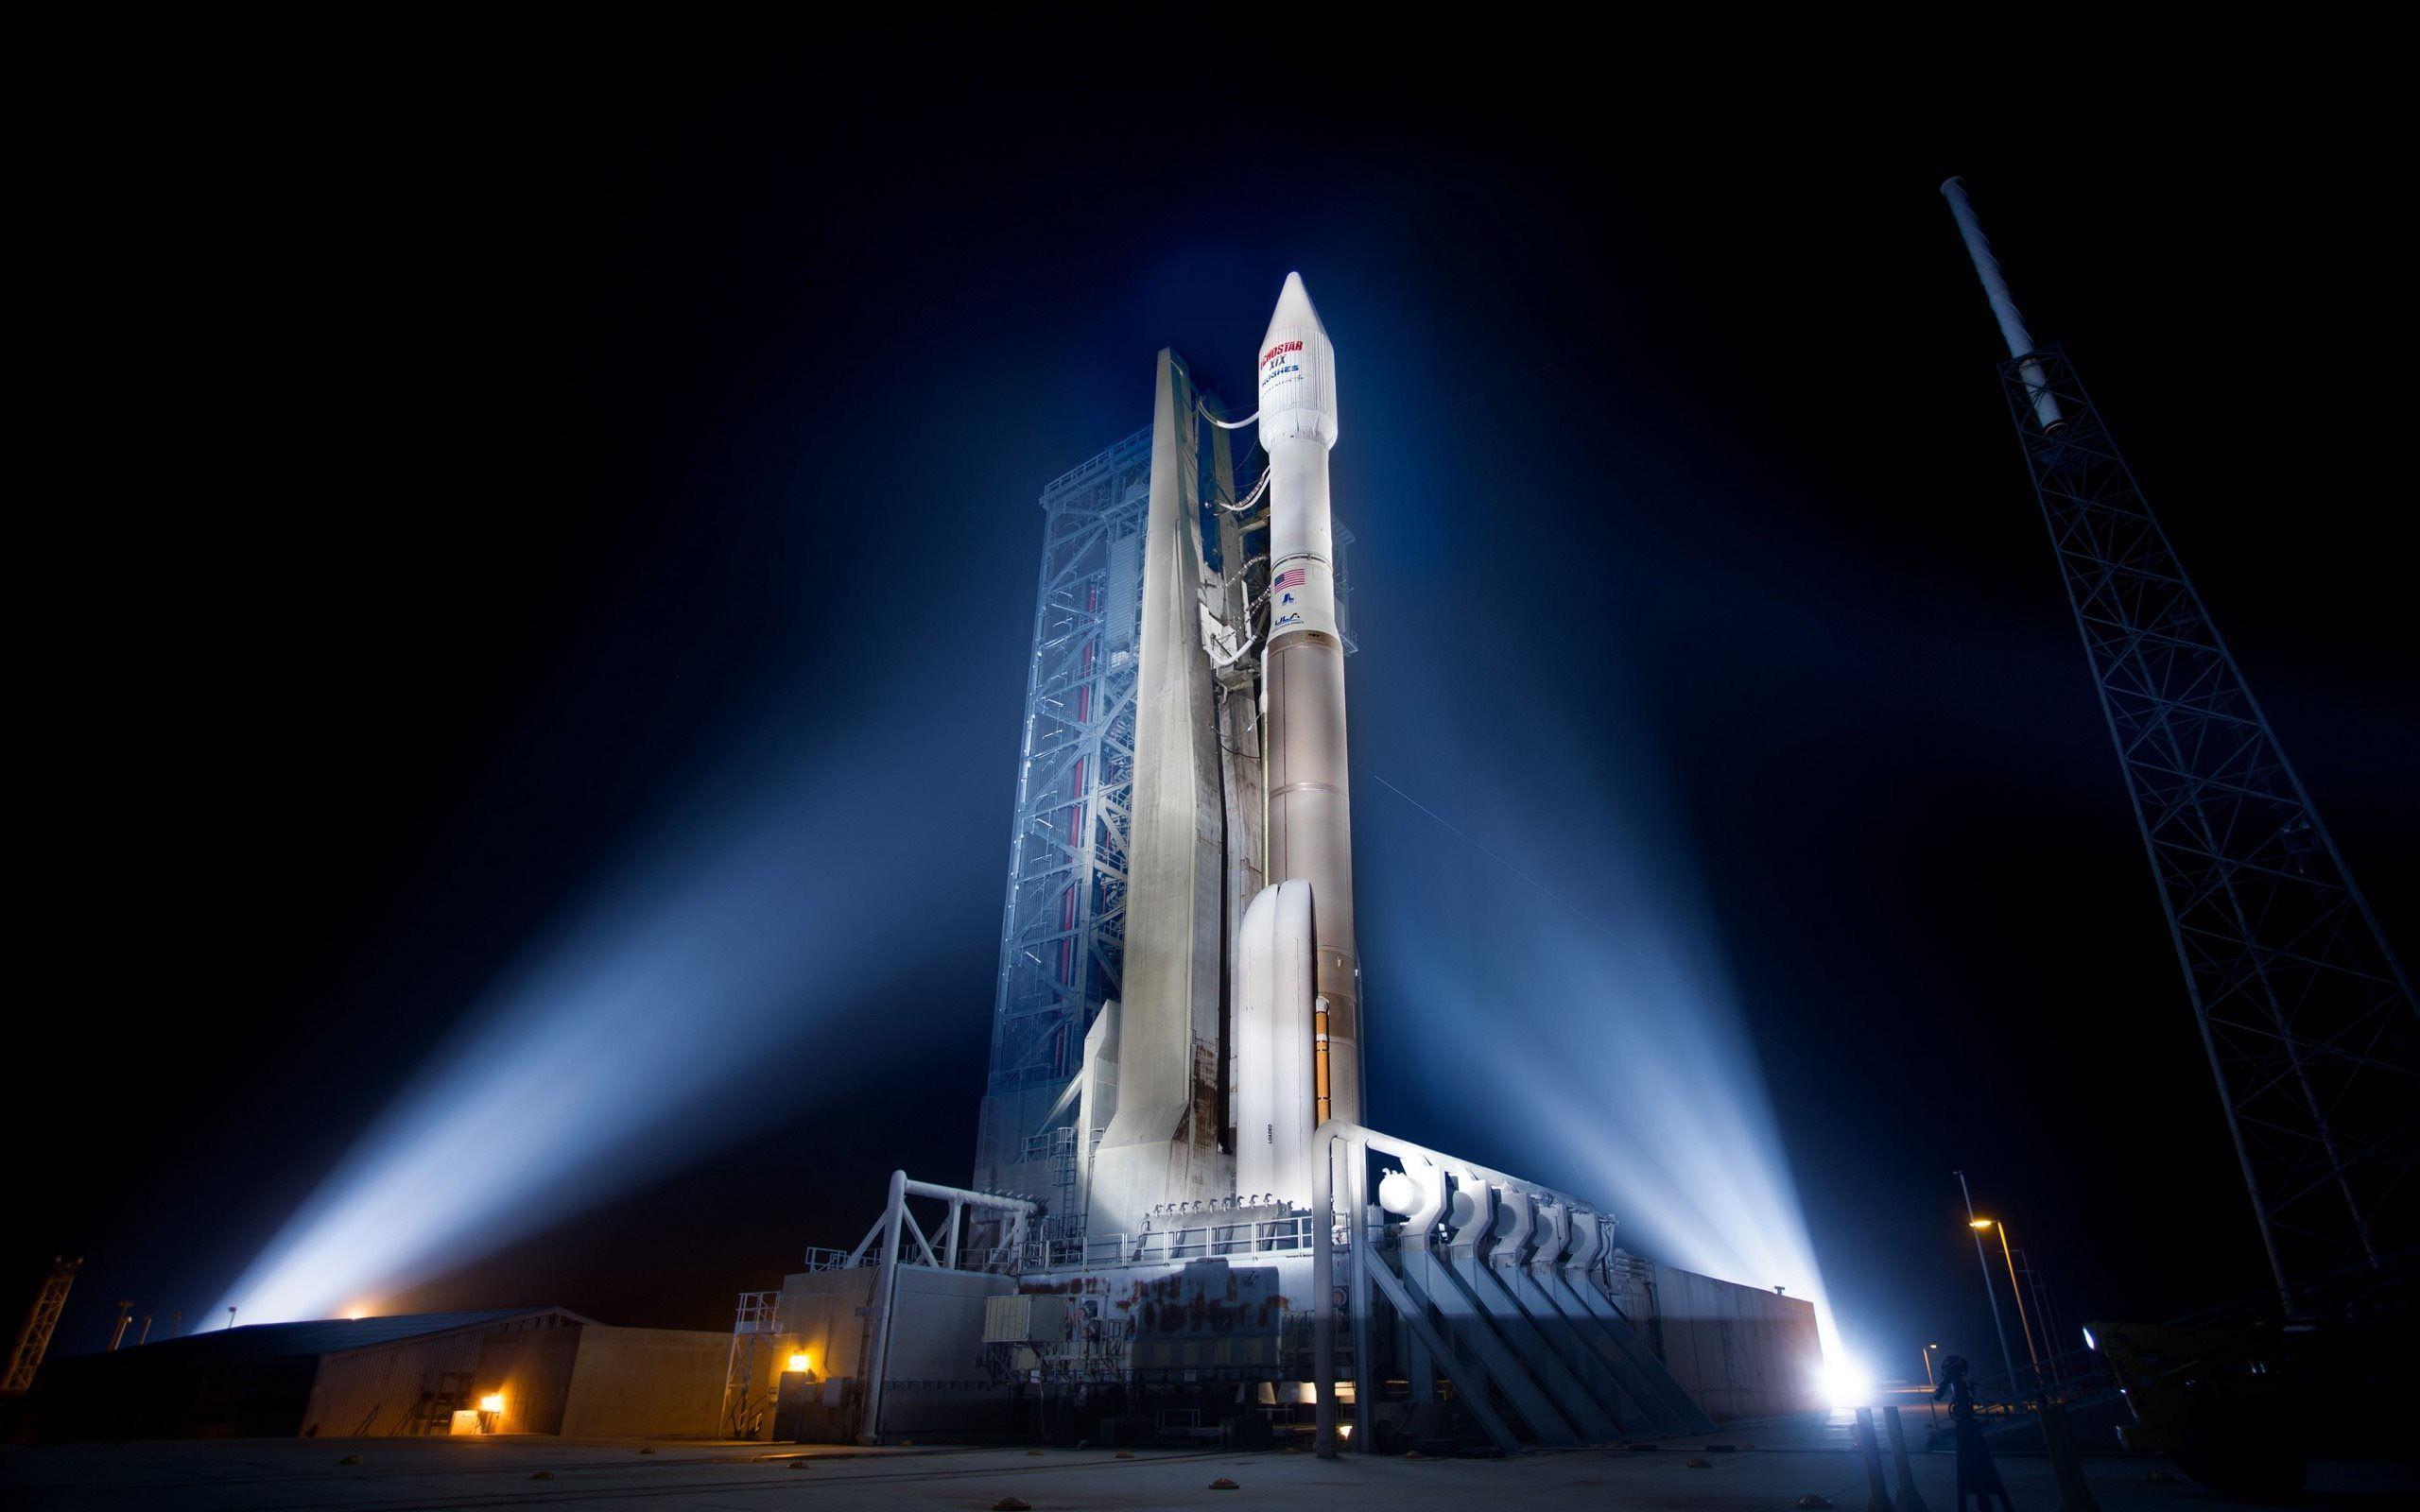 Download wallpaper carrier rocket, Atlas V Launch vehicle